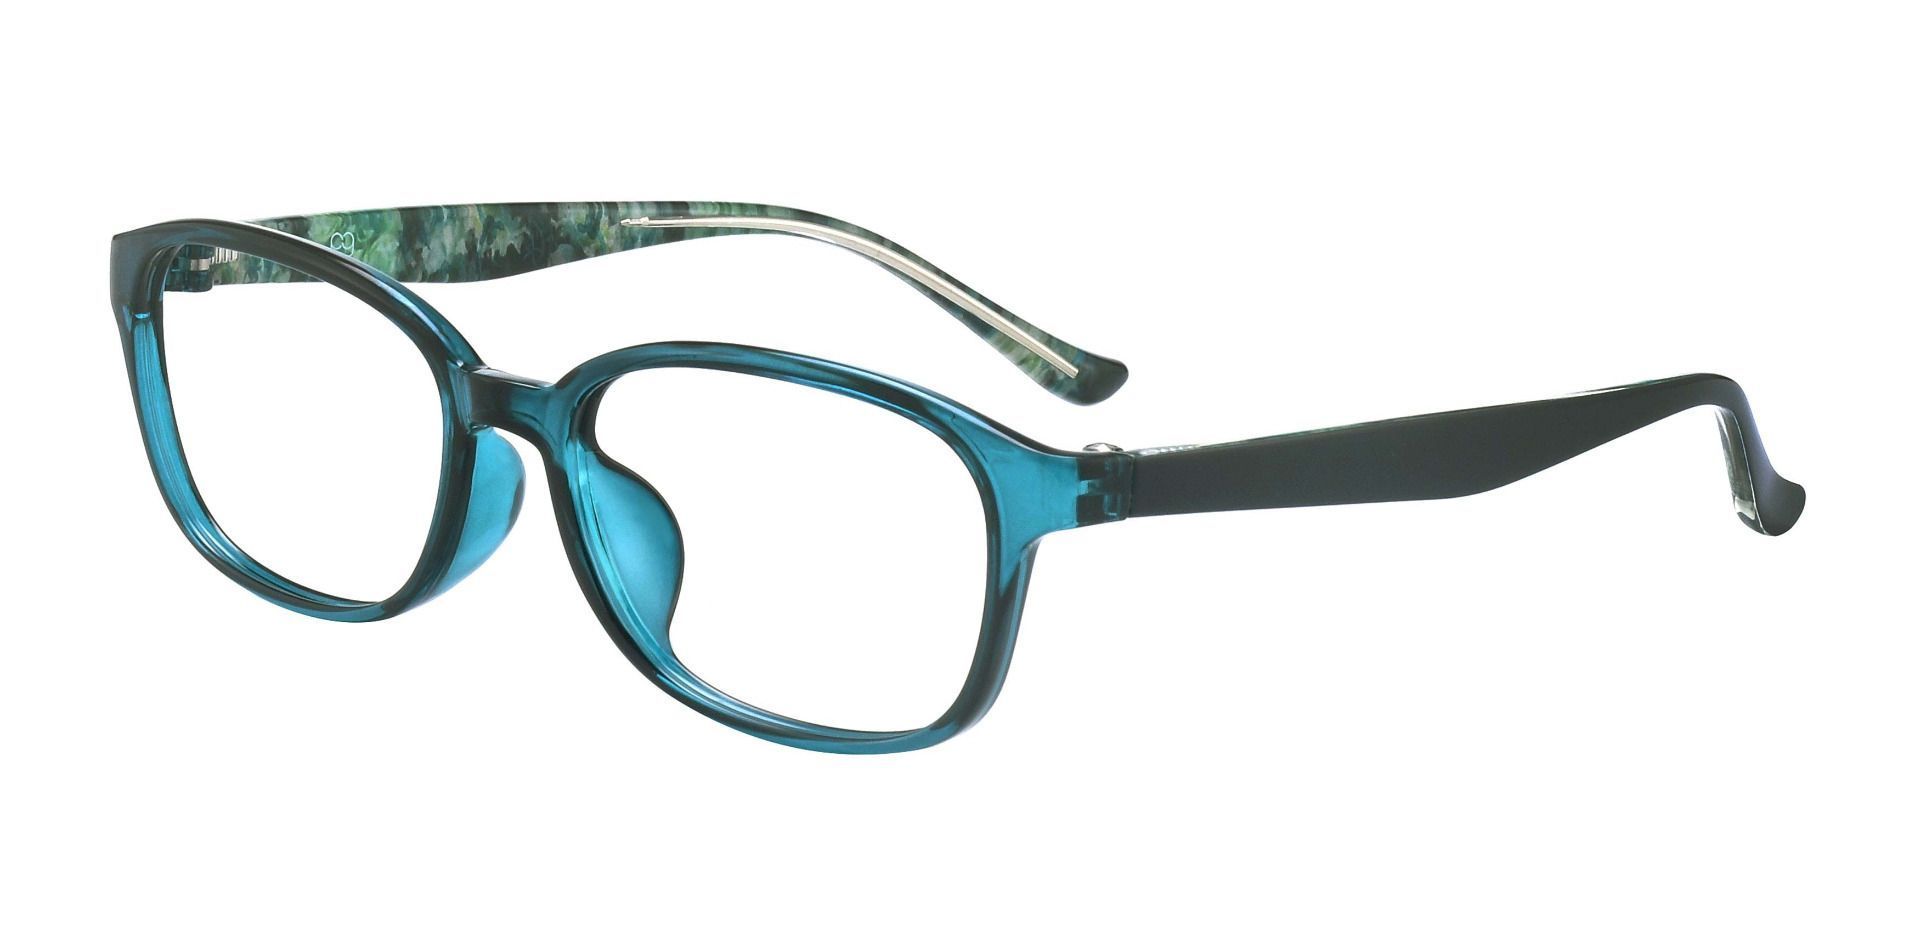 Hemingway Oval Reading Glasses - Blue